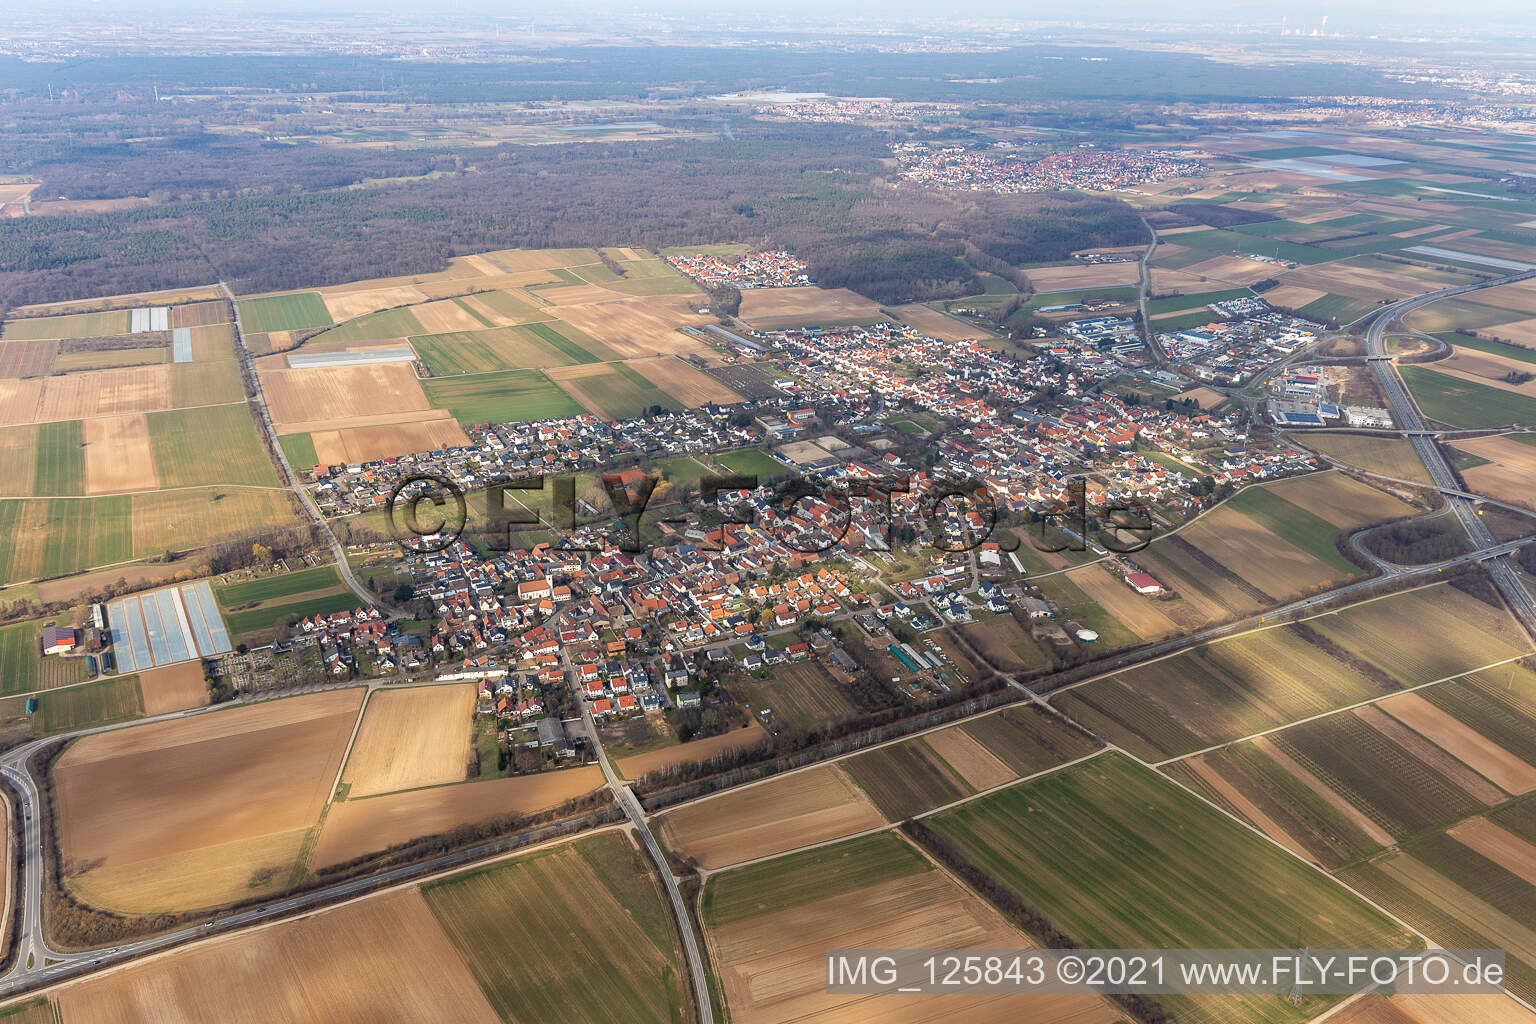 Drone image of Schwegenheim in the state Rhineland-Palatinate, Germany